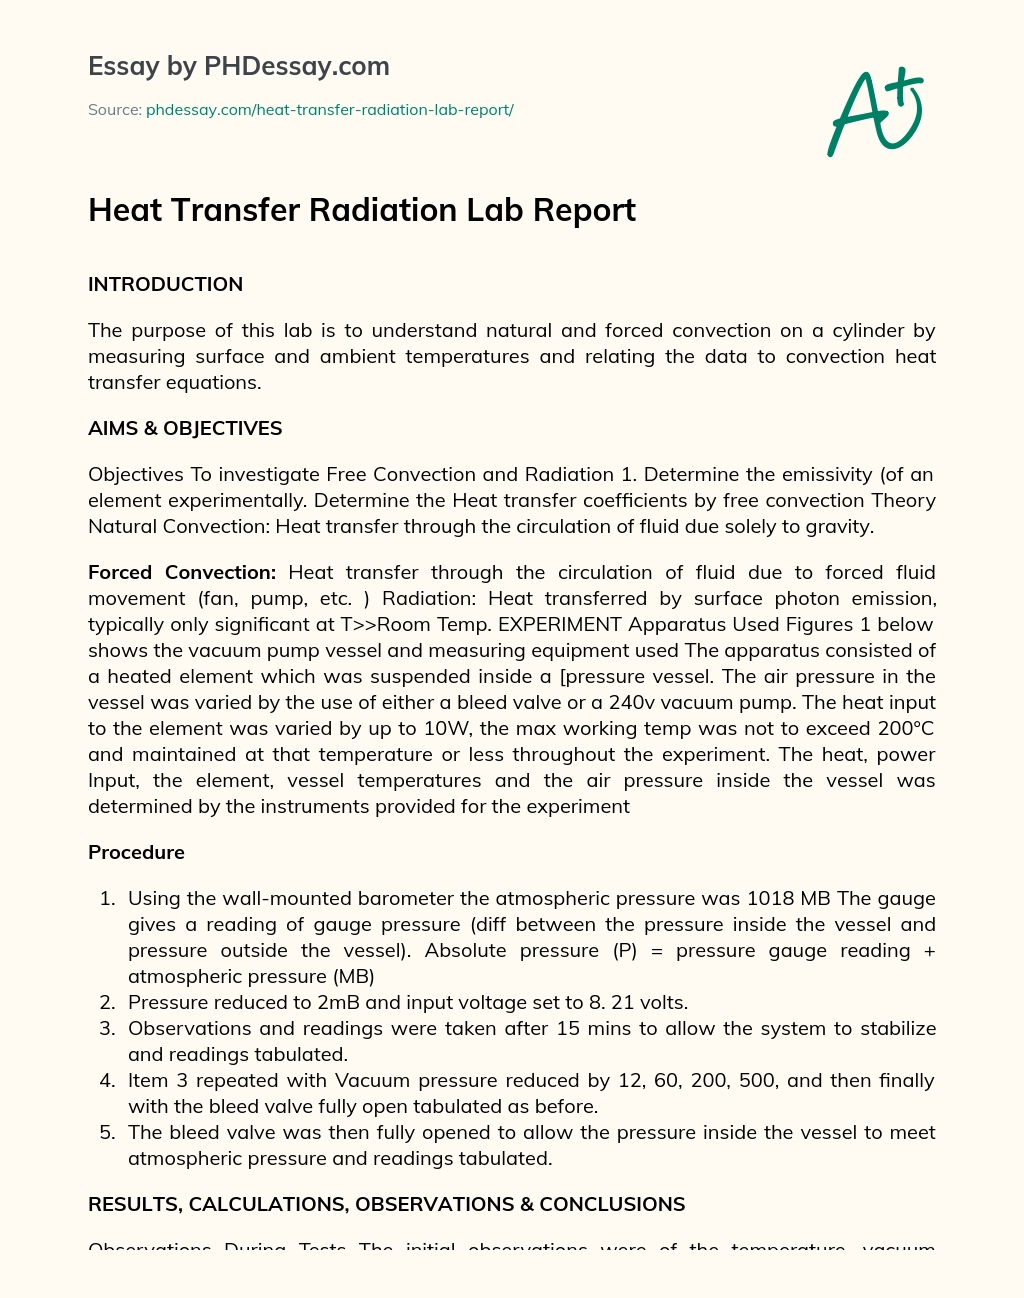 Heat Transfer Radiation Lab Report essay